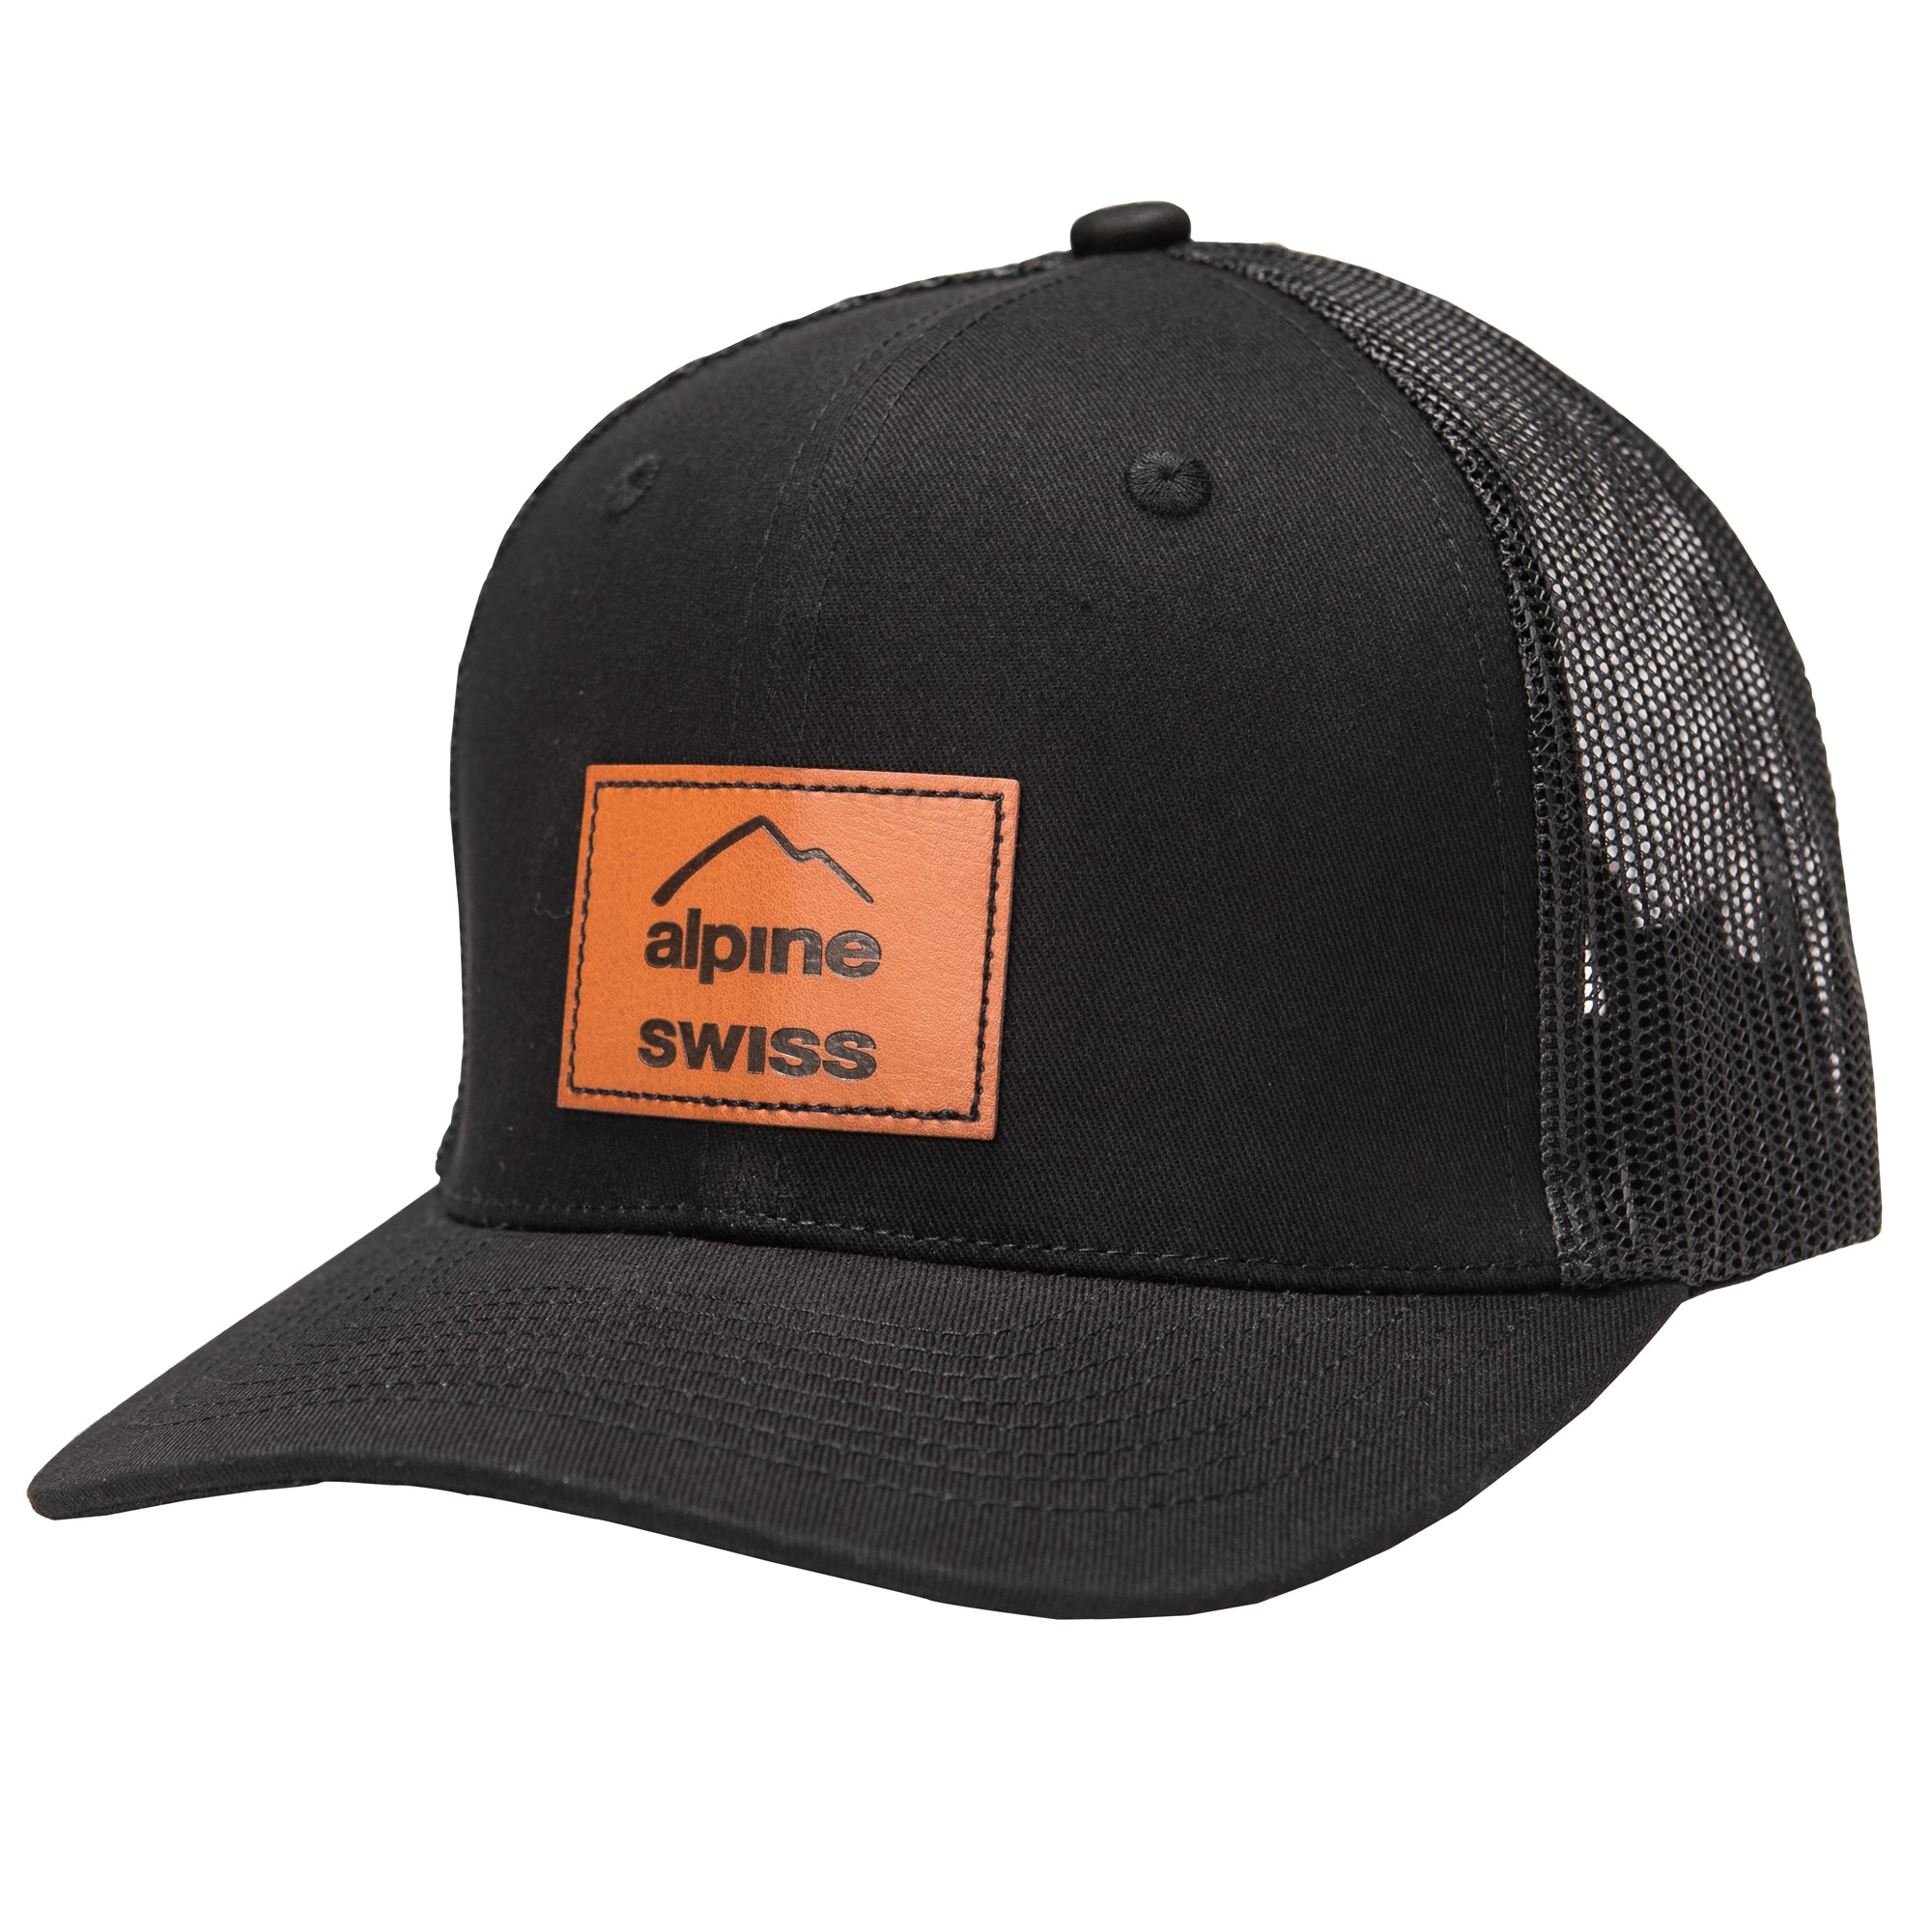 Alpine Swiss Trucker Hat Snapback Mesh Back Cap Adjustable Breathable Casual Baseball Cap Black